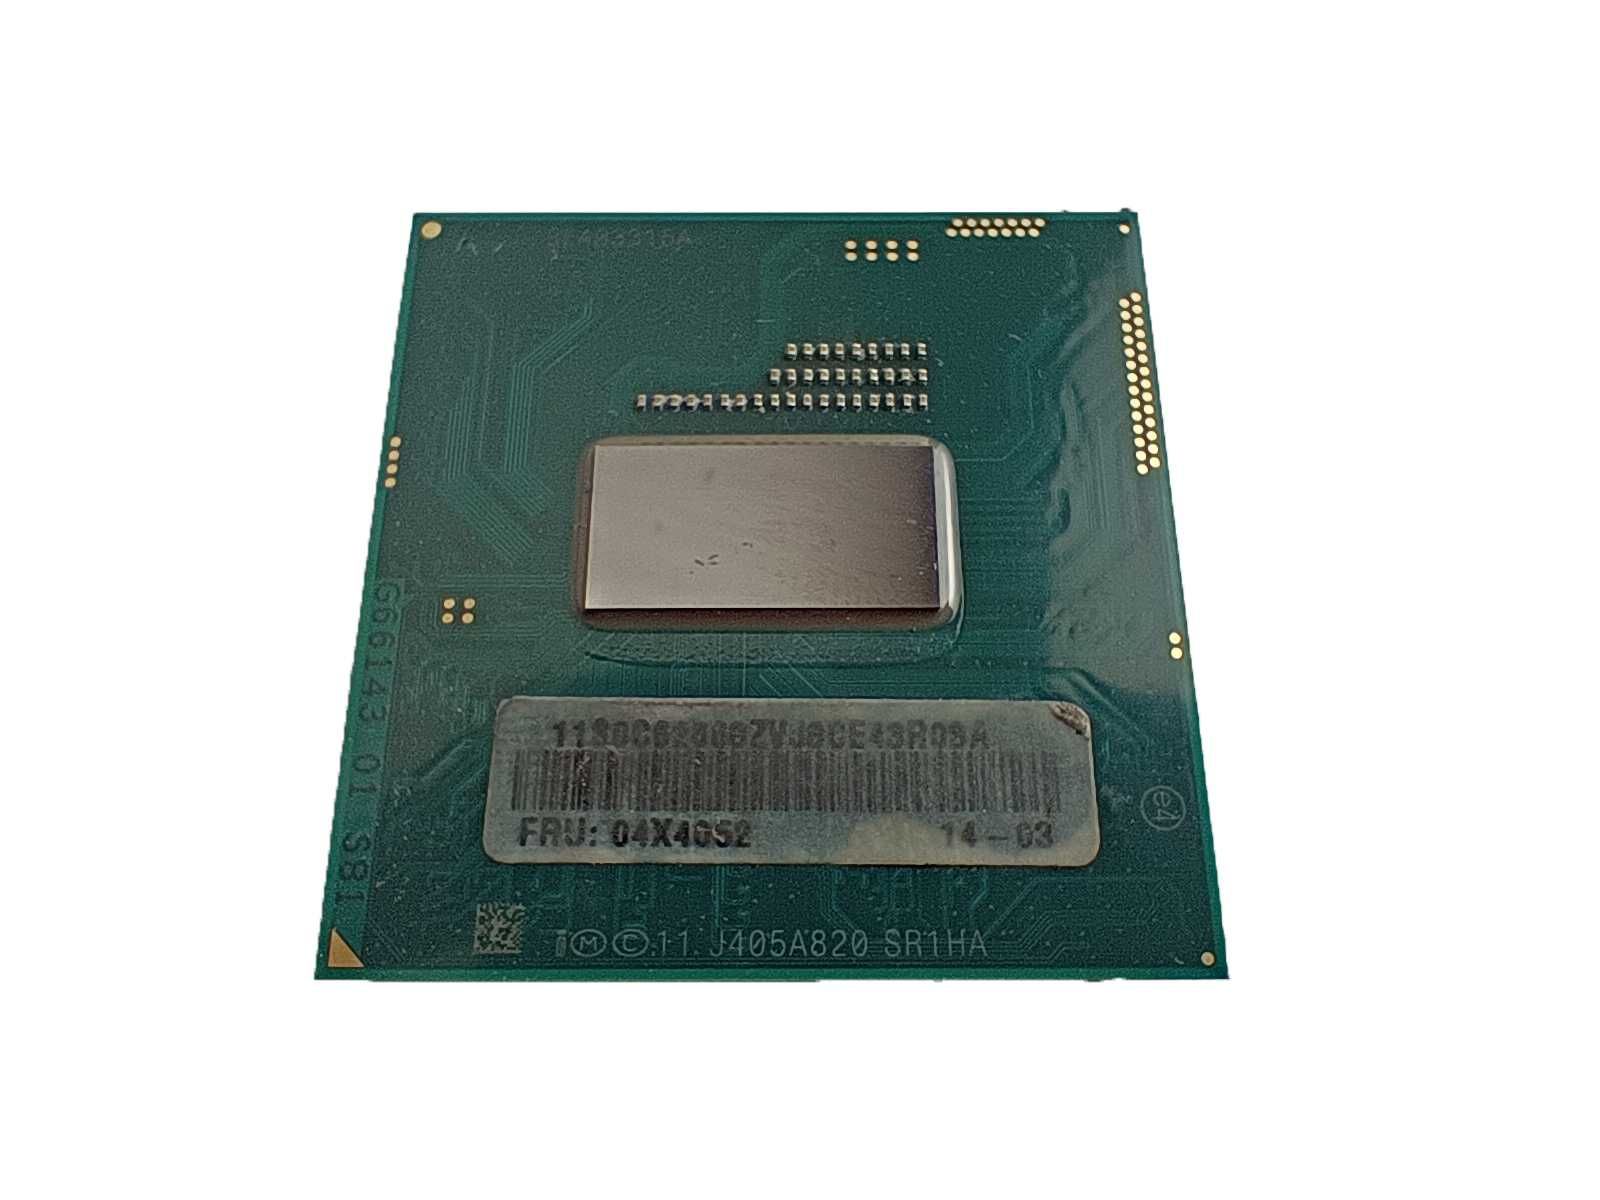 Procesor Intel i5-4200M 2,5 GHz